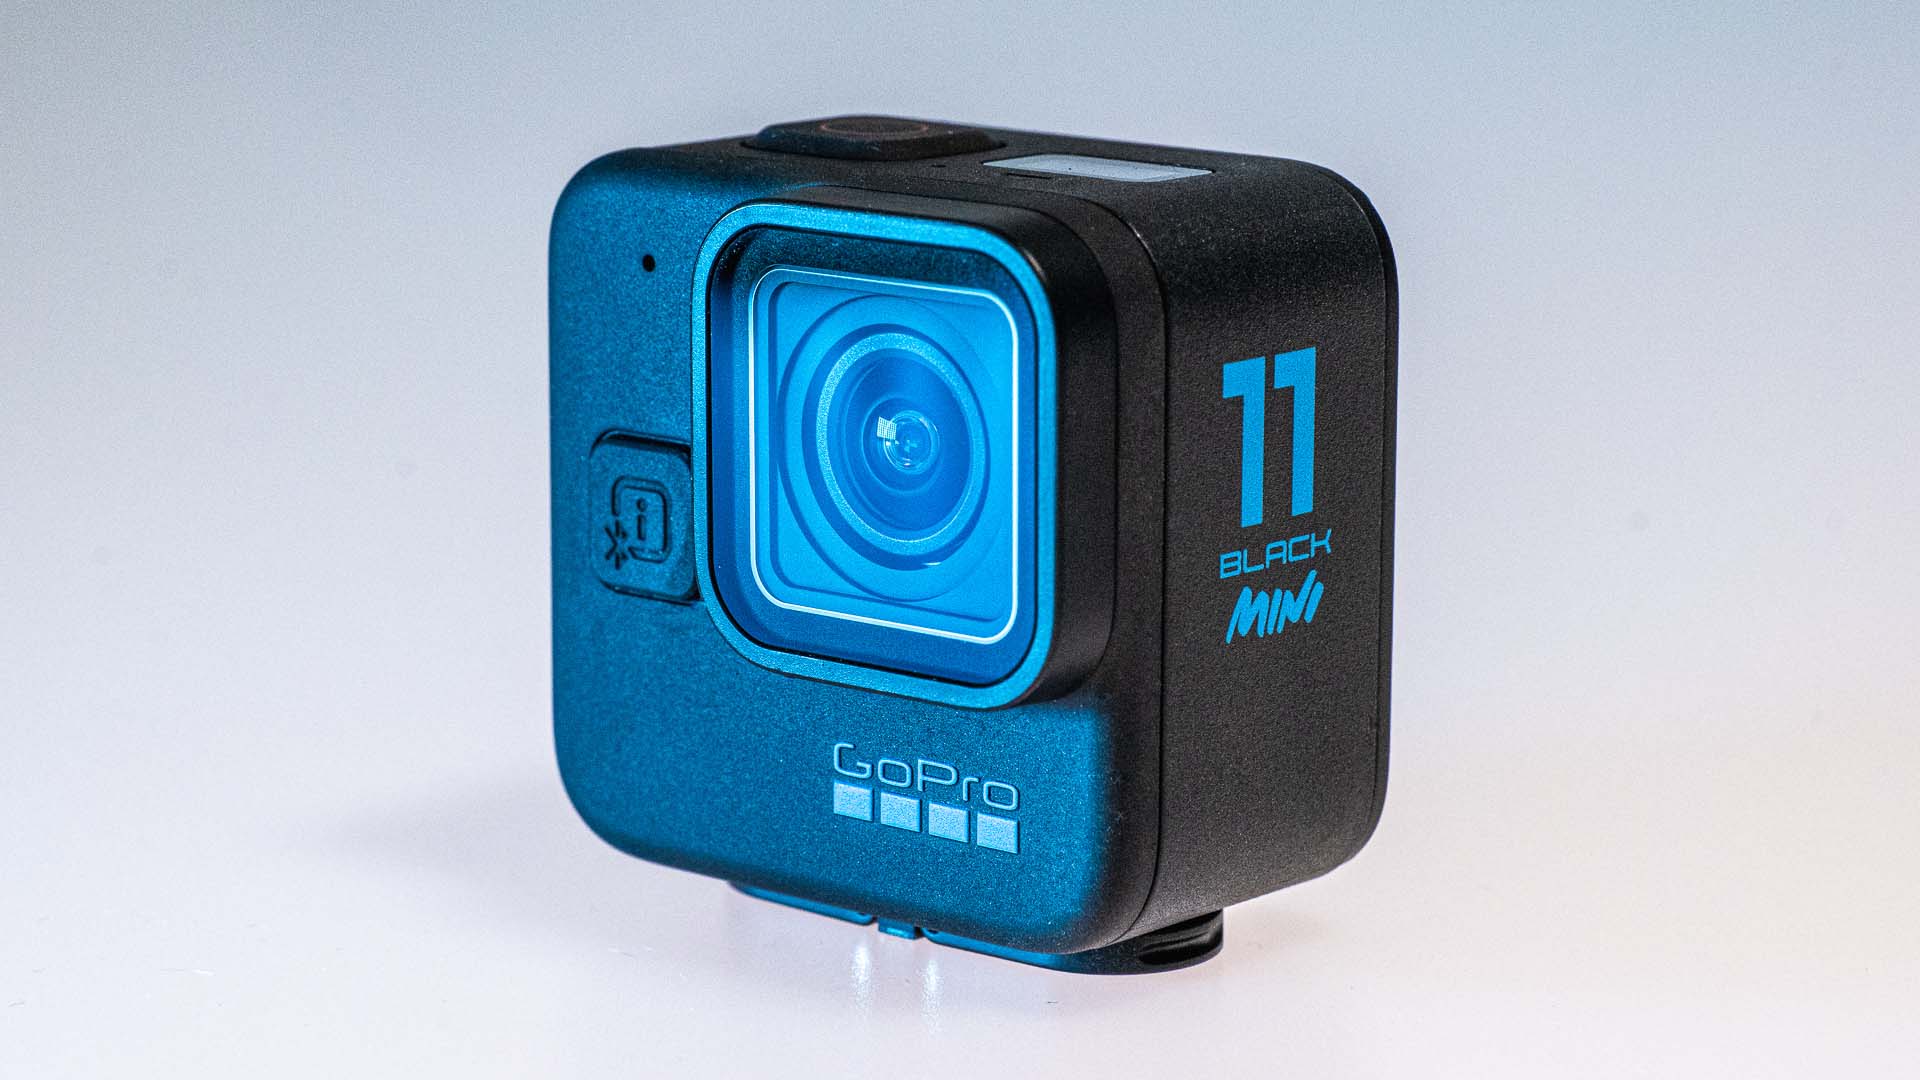 GoPro: Introducing HERO11 Black Mini — Smaller, Lighter, Simpler